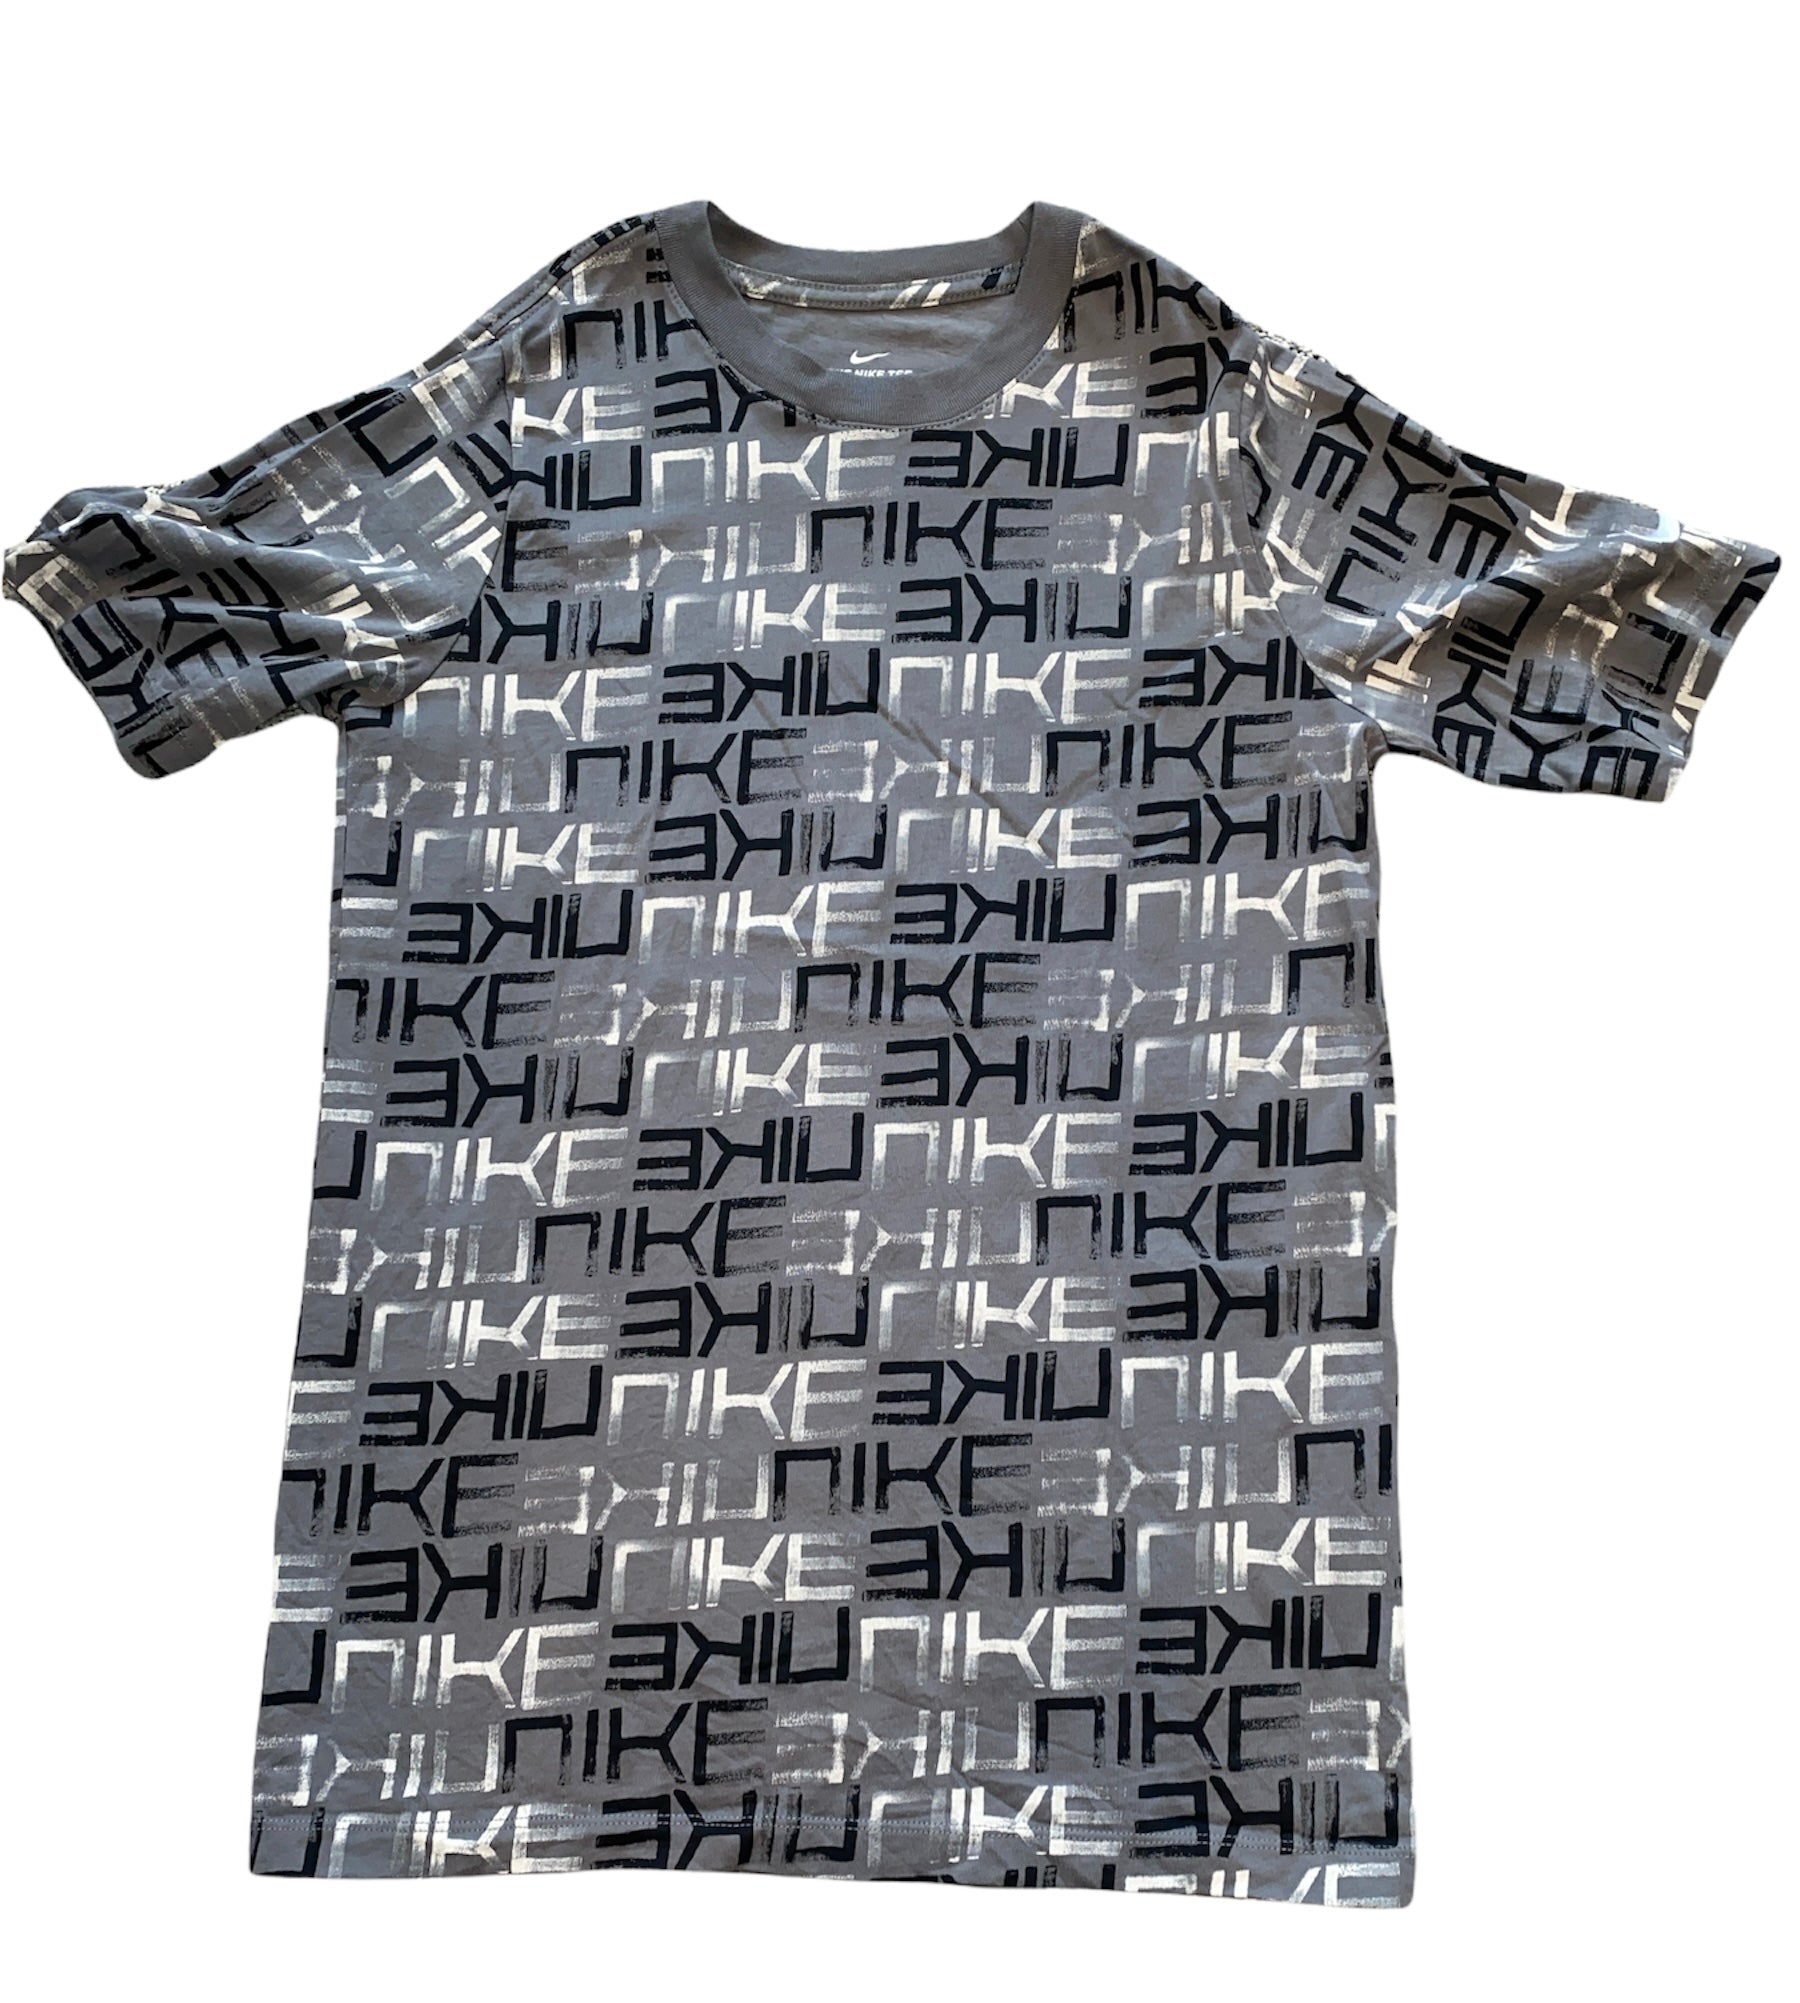 blanco lechoso Hula hoop duda The Nike Tee boys Nike logo pattern tee shirt XL(16-18) – Makenna's Threads